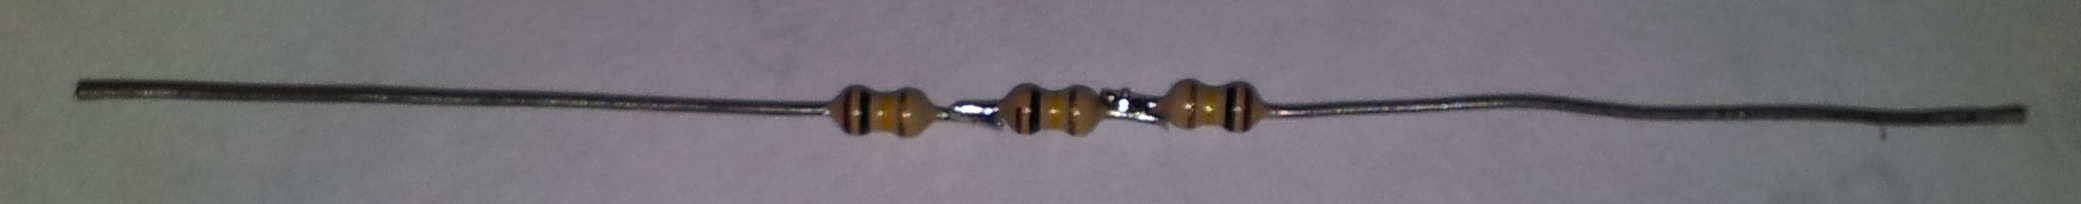 Resistors in Series